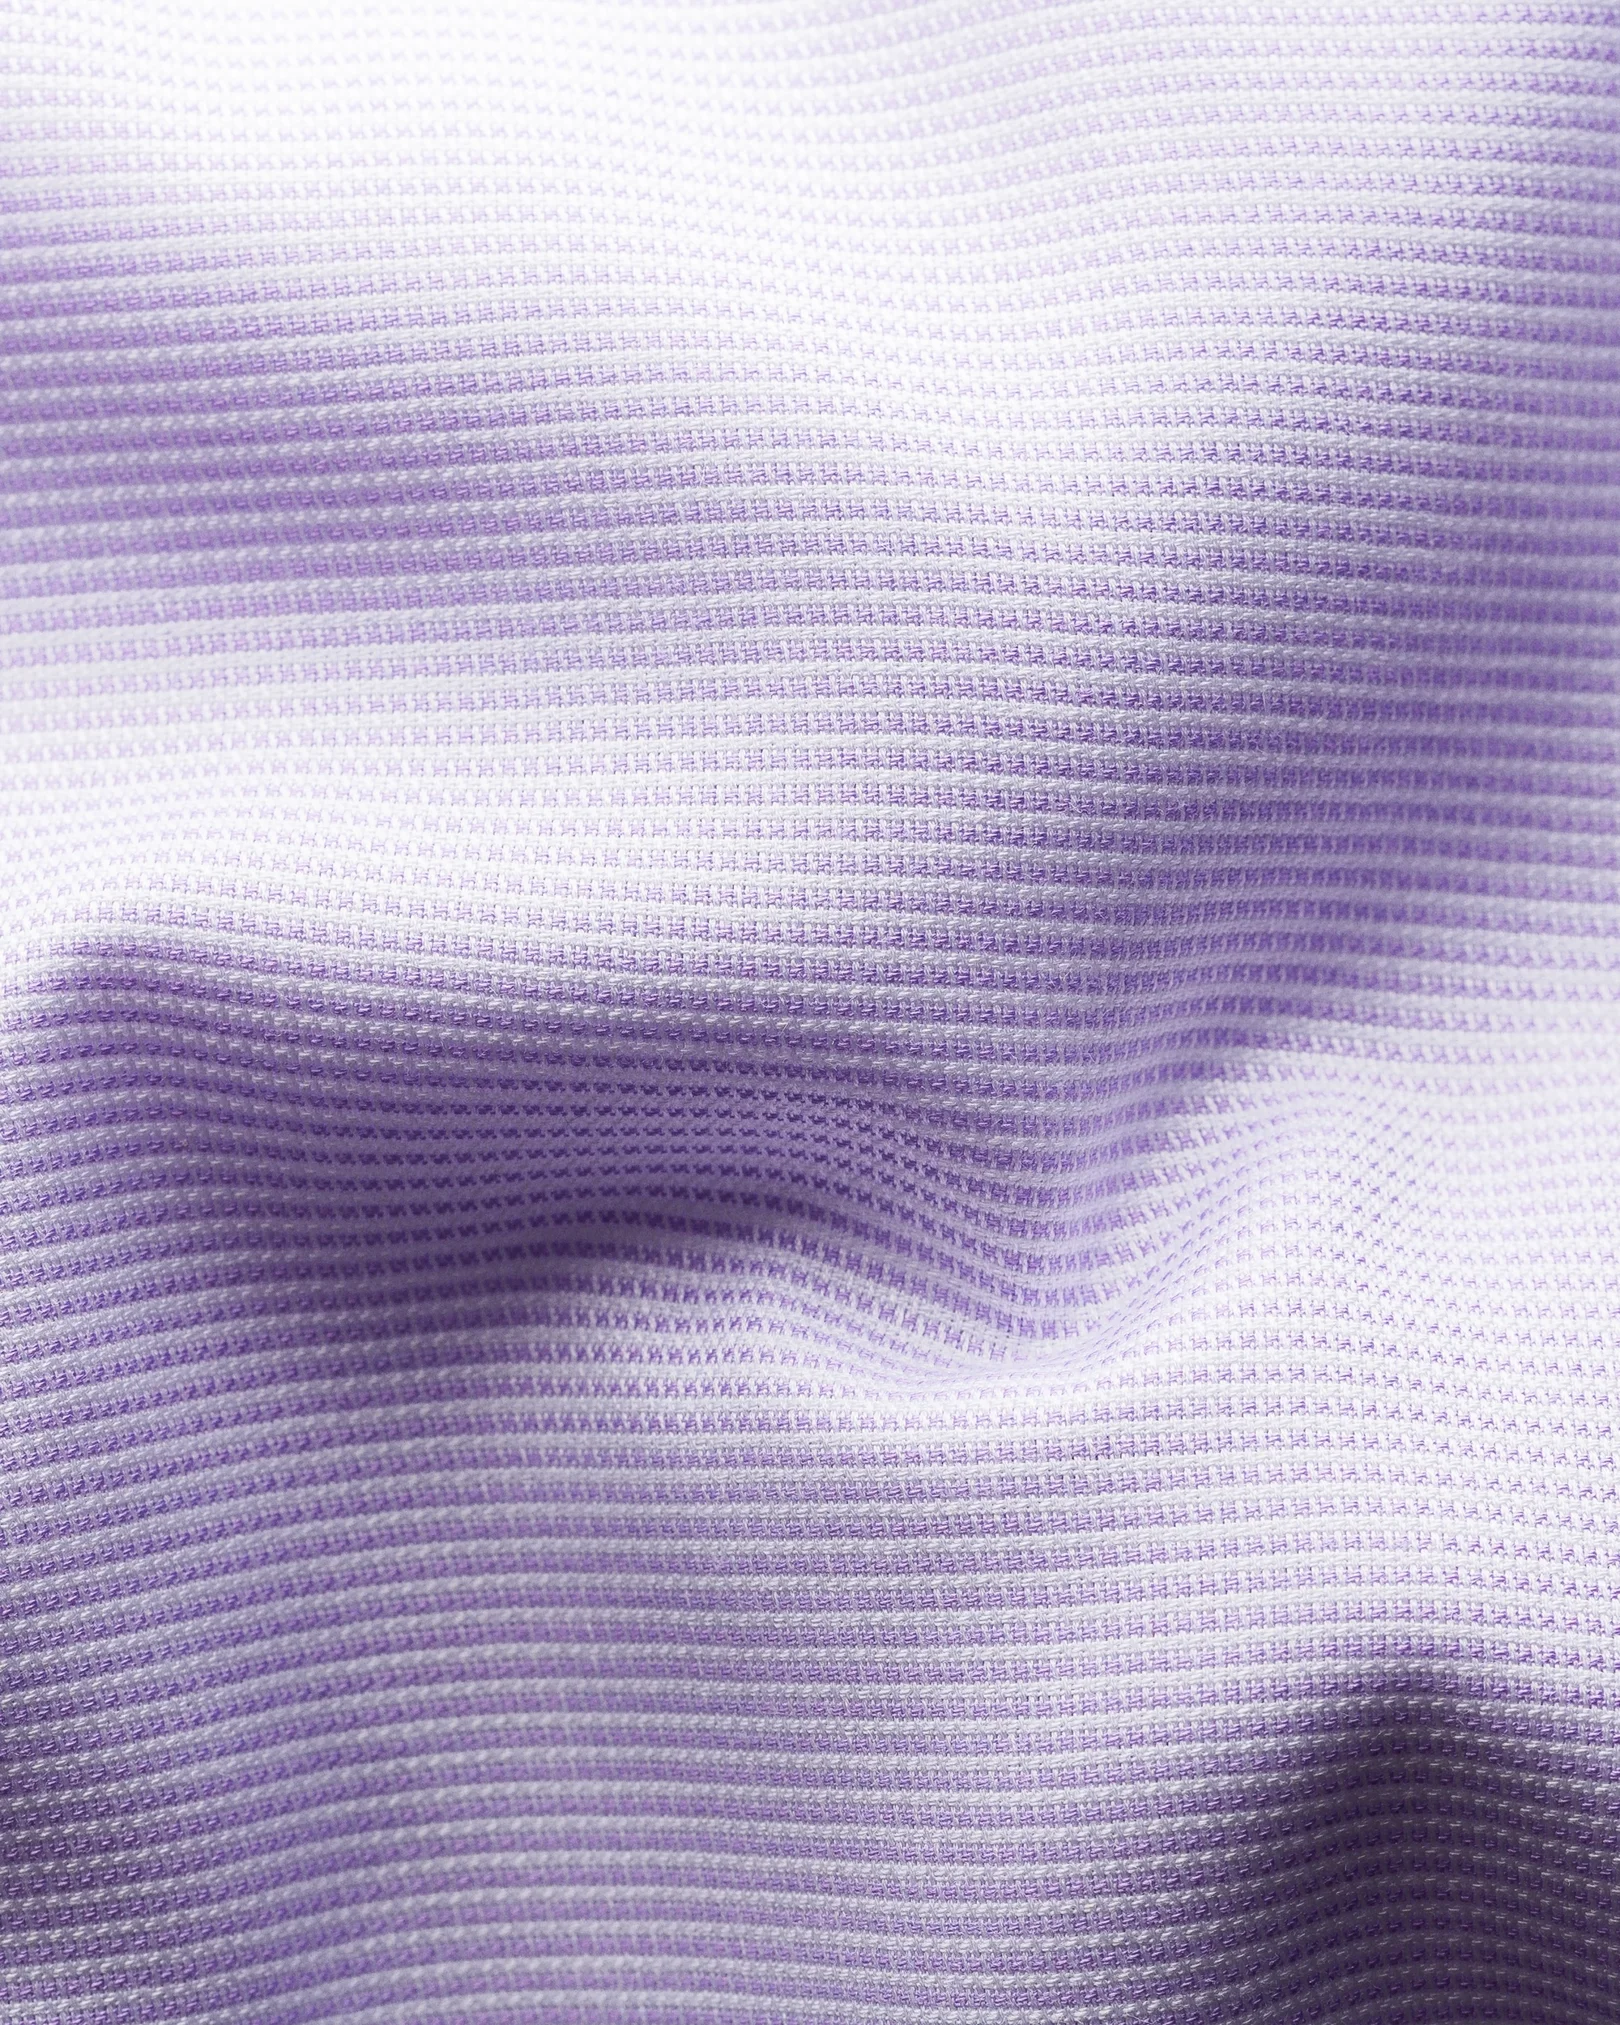 Eton - light purple twill shirt extreme cut away